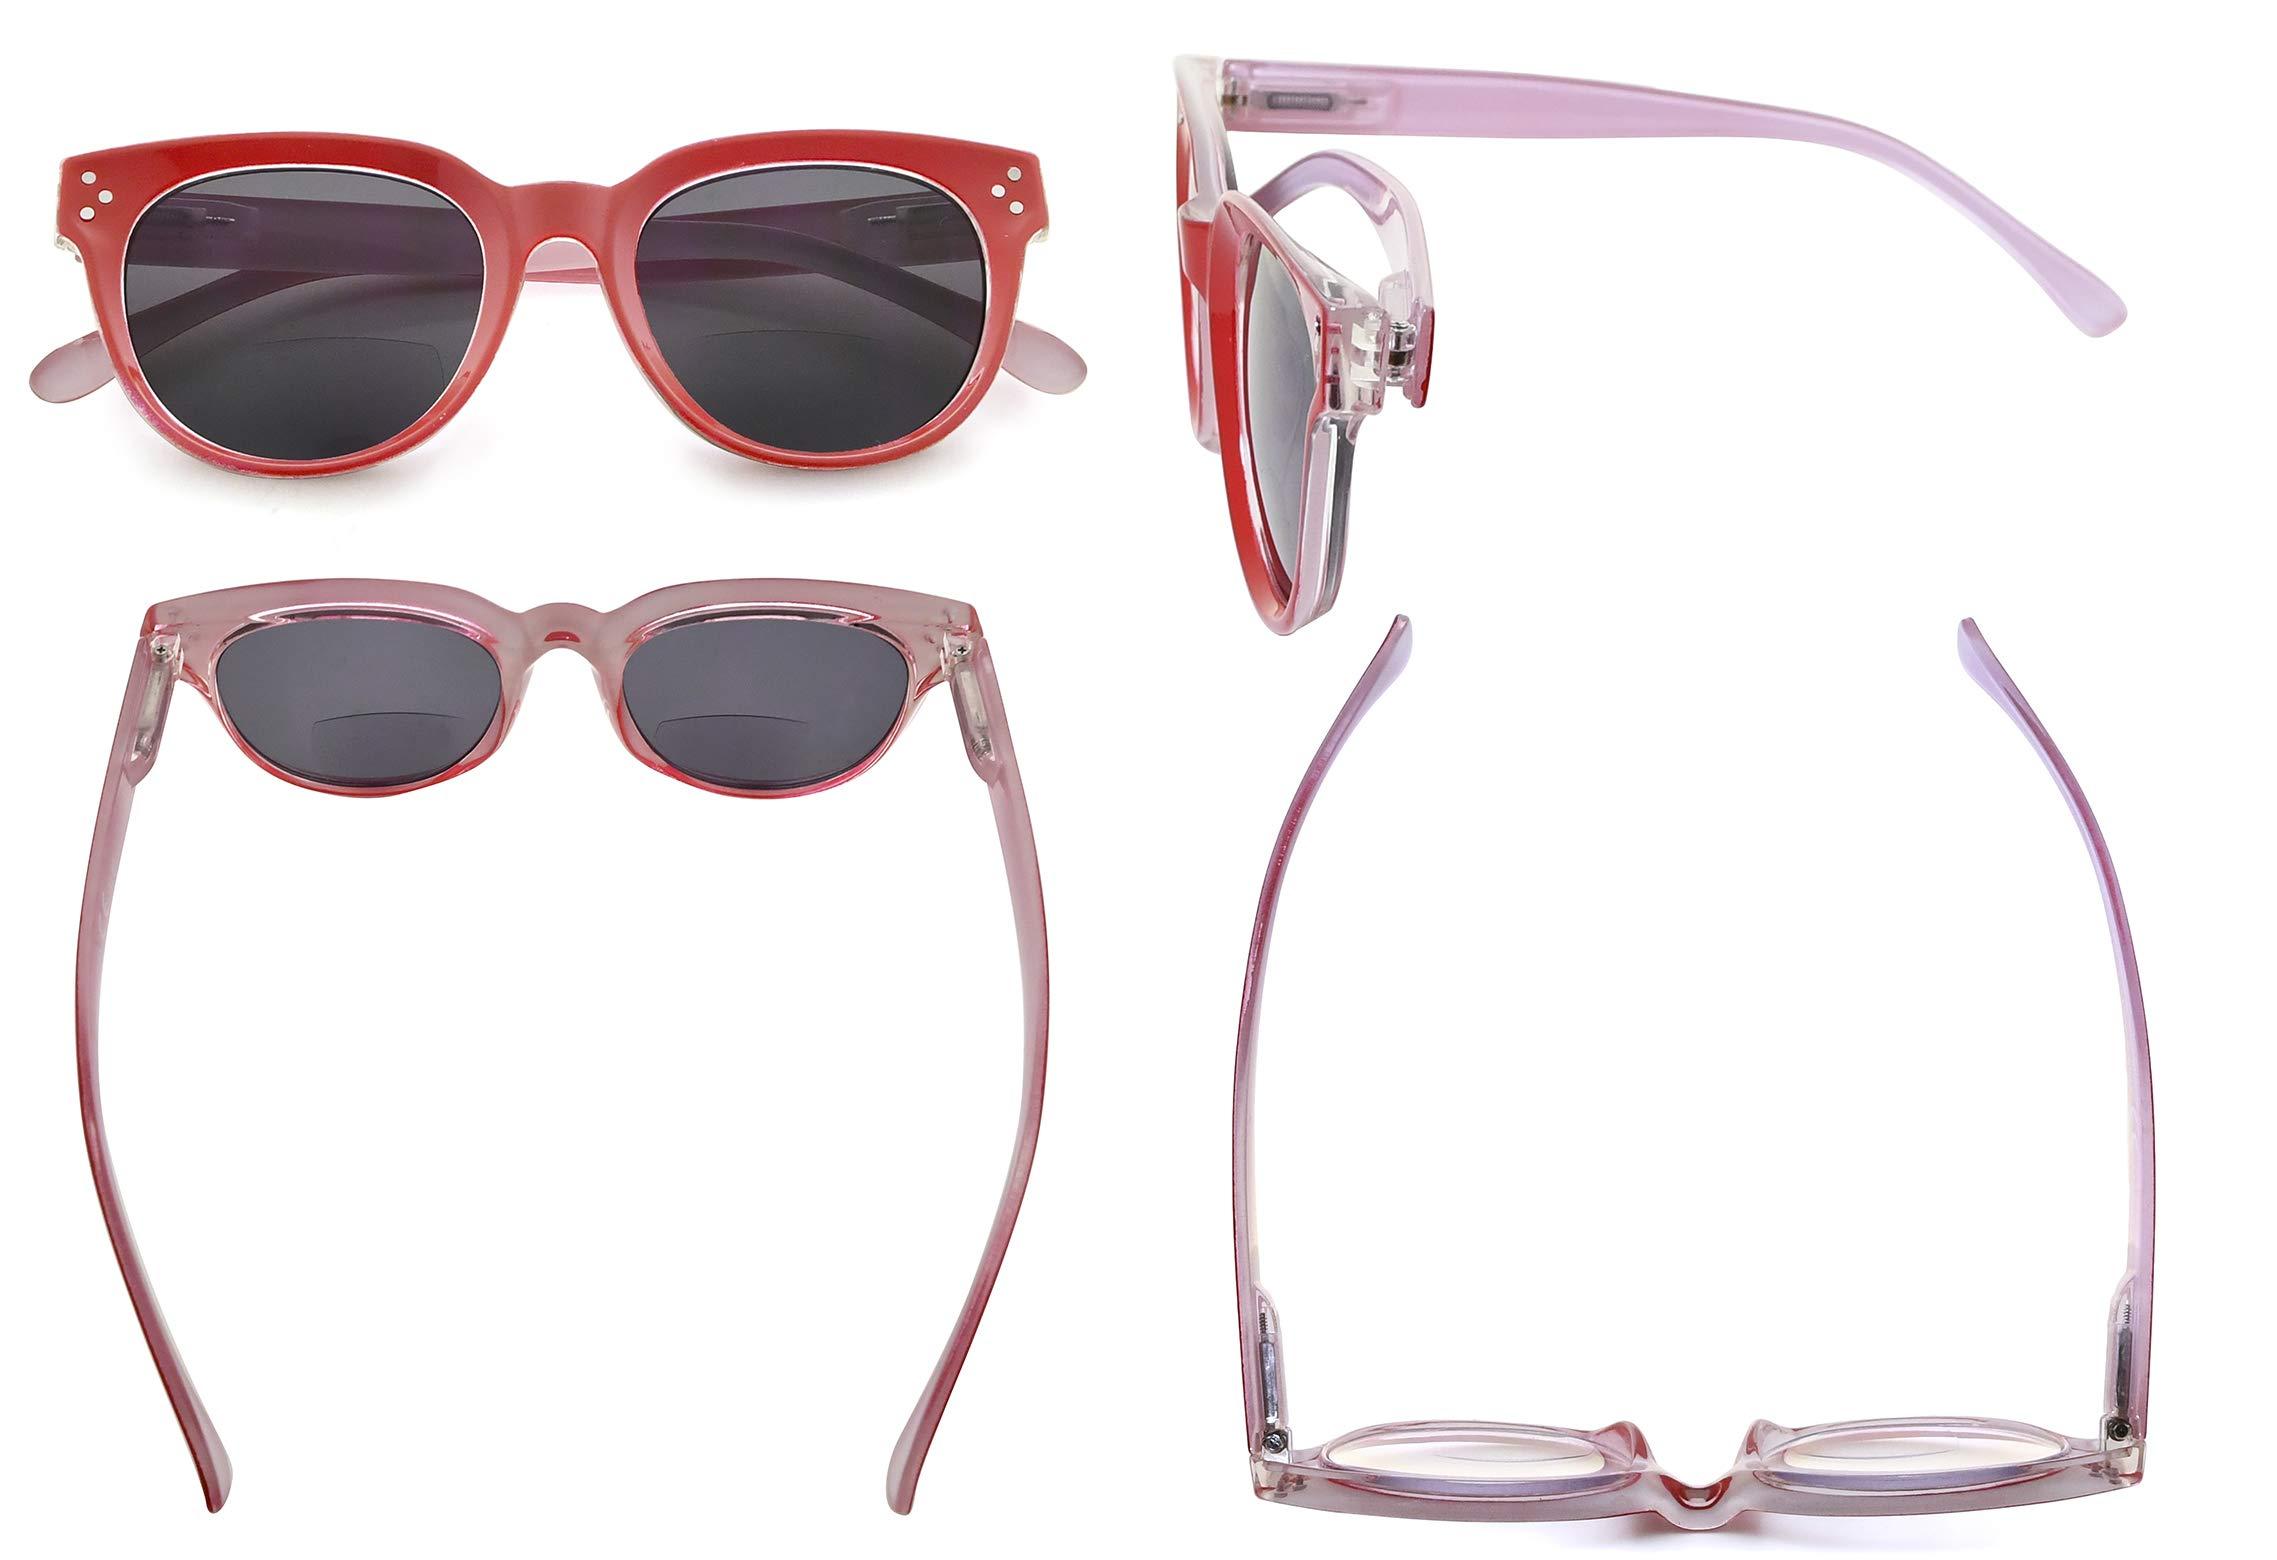 Eyekepper Bifocal Glasses for Women Reading under the Sun Stylish Bifocal Readers Tinted Lens - Red +3.00 1